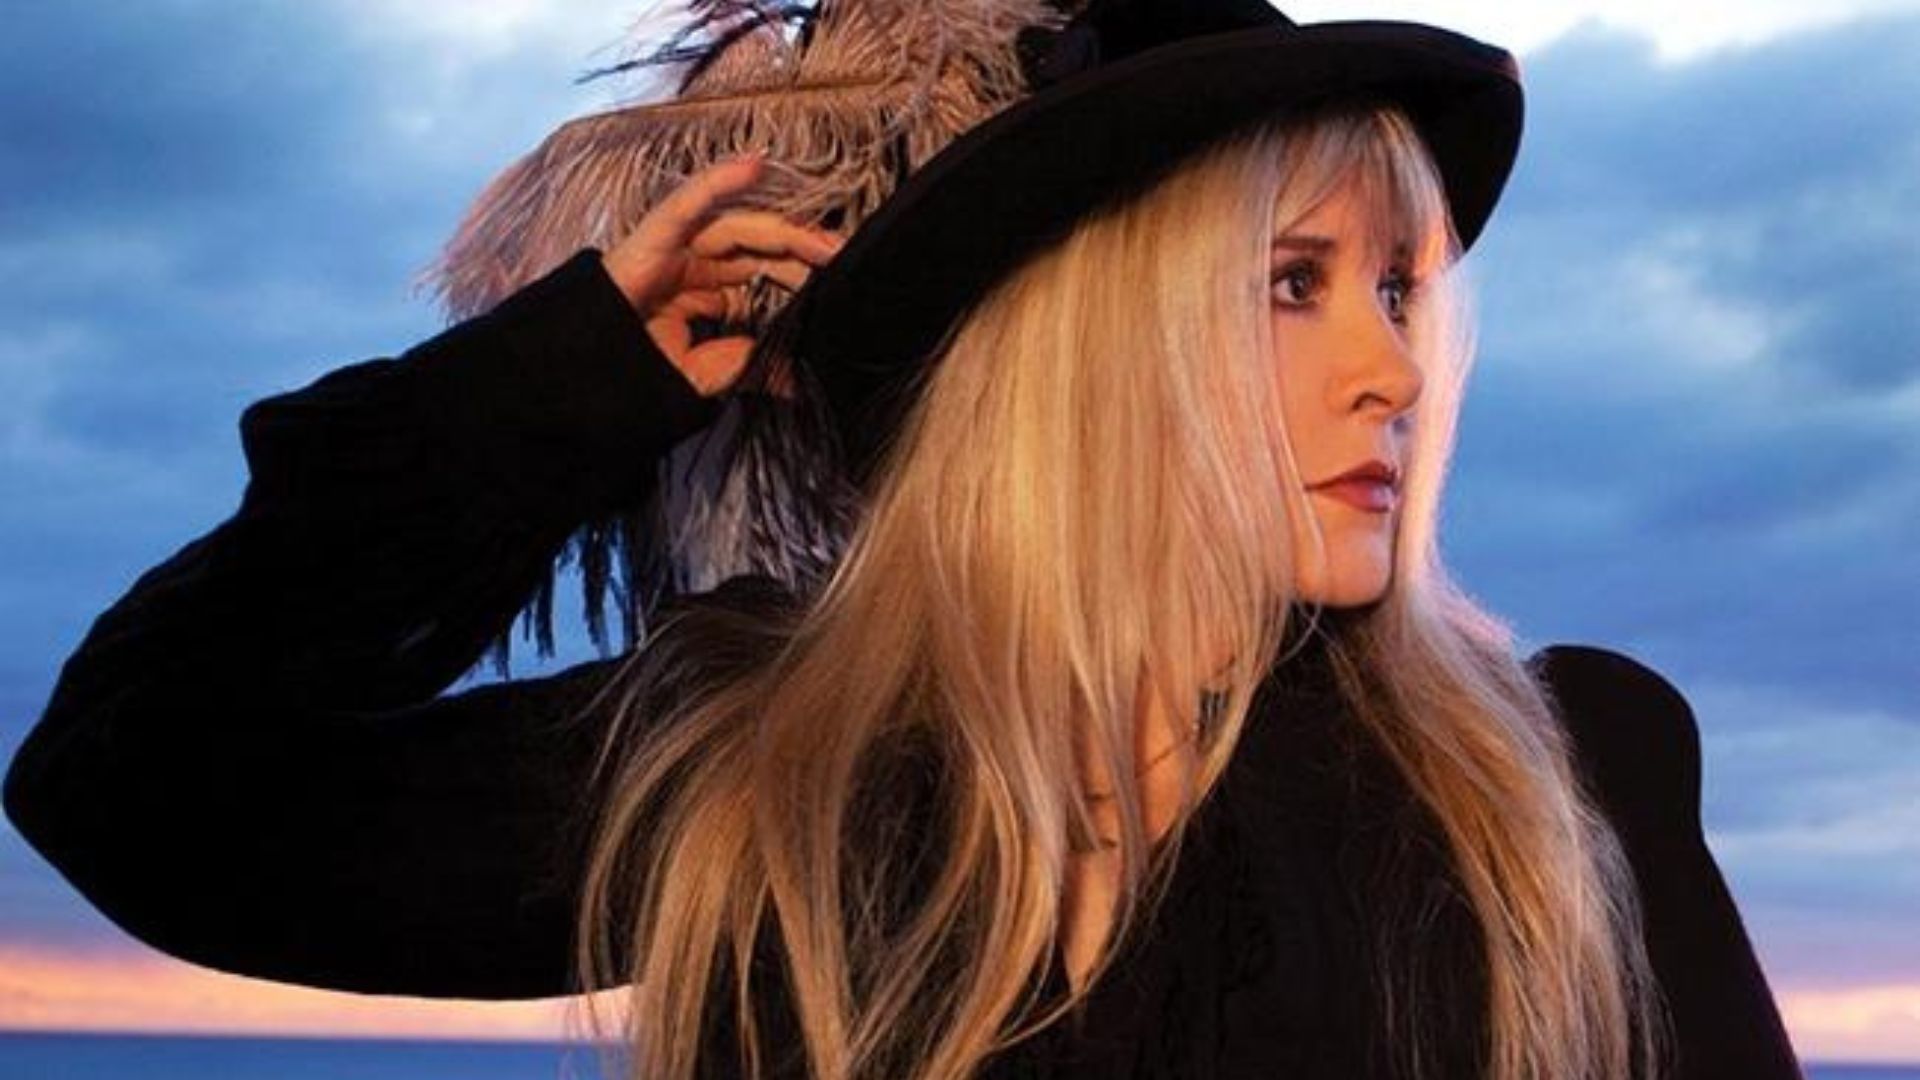 Stevie Nicks Wearing Black Hat And Dress